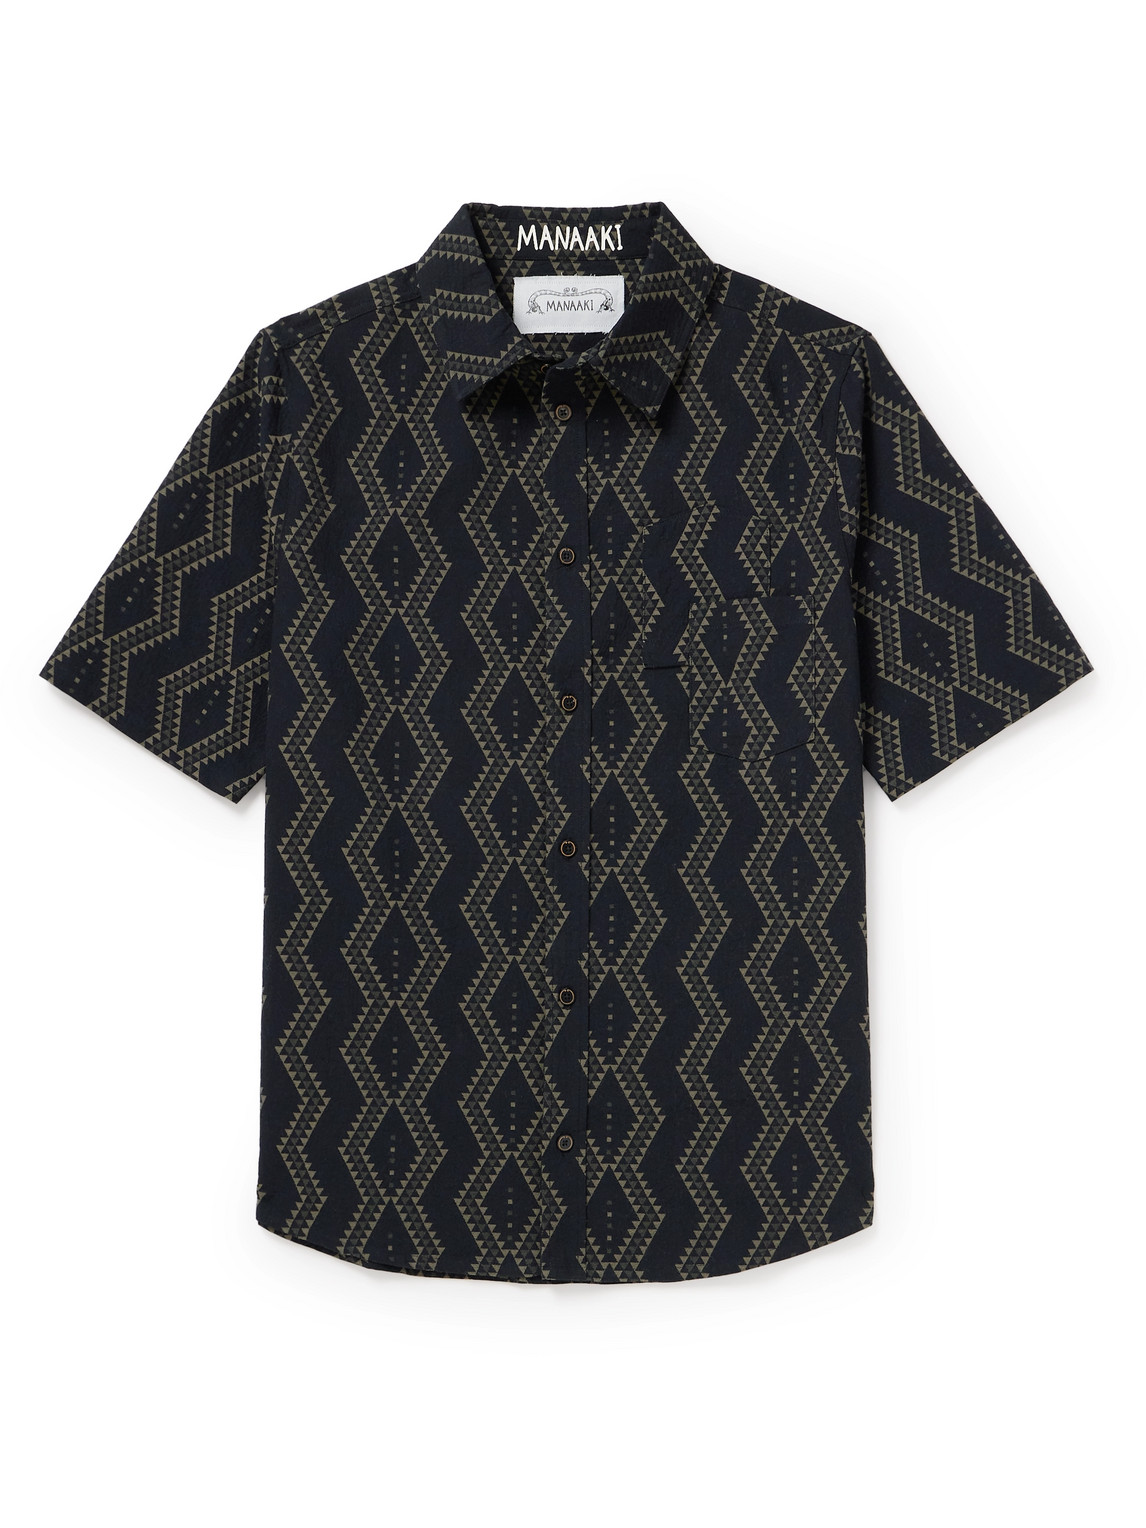 Manaaki Tai Cotton-jacquard Shirt In Black